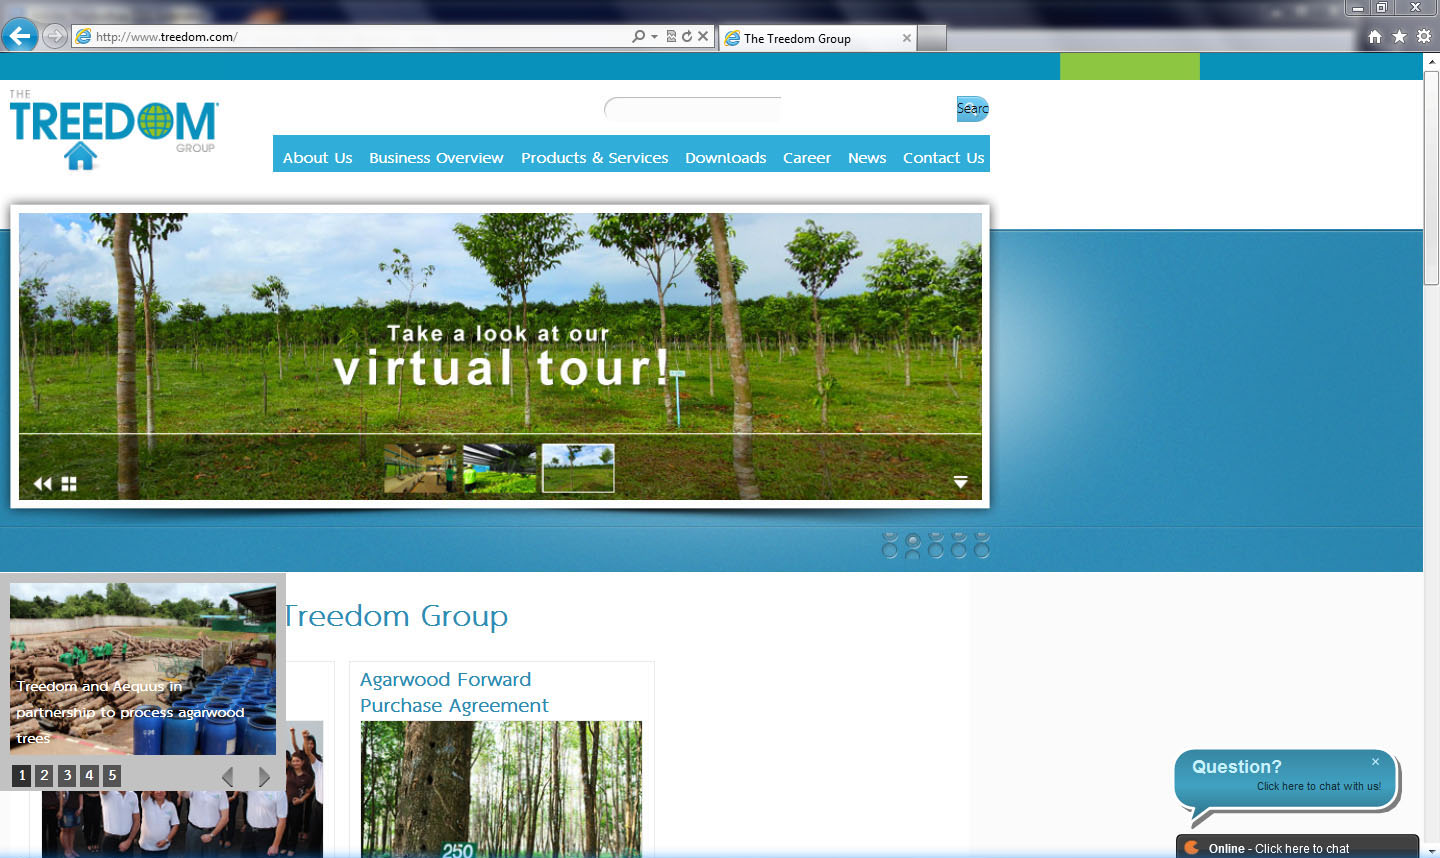 Treedom (Thailand) Ltd. Panorama 360 virtual tour